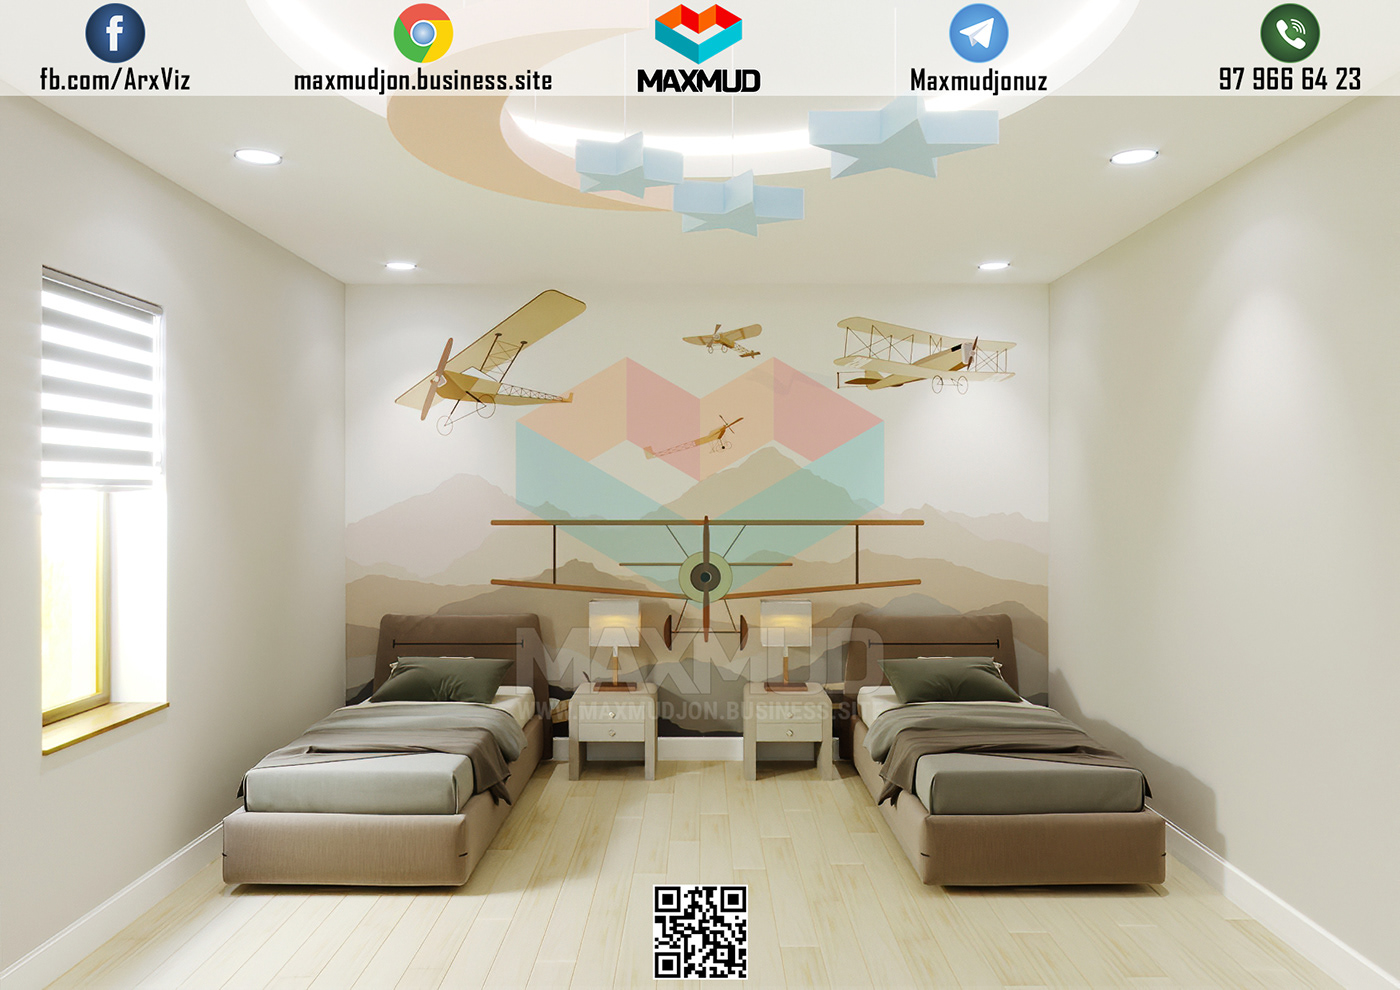 Penthouse,
Bedroom,
interior visualization,